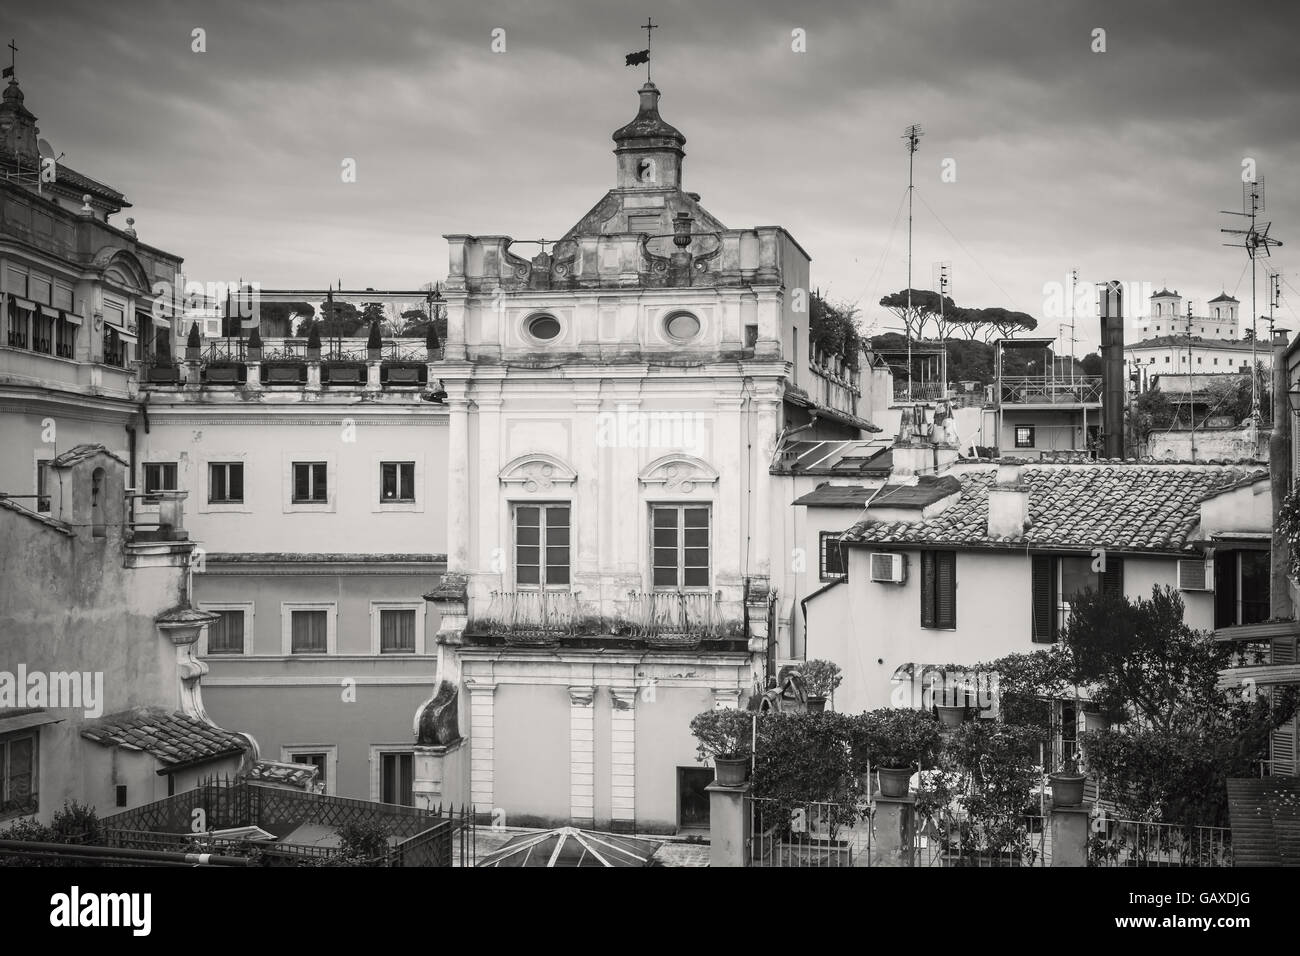 Skyline of old Rome, Italy. Via del Corso, retro stylized black and white street view photo Stock Photo